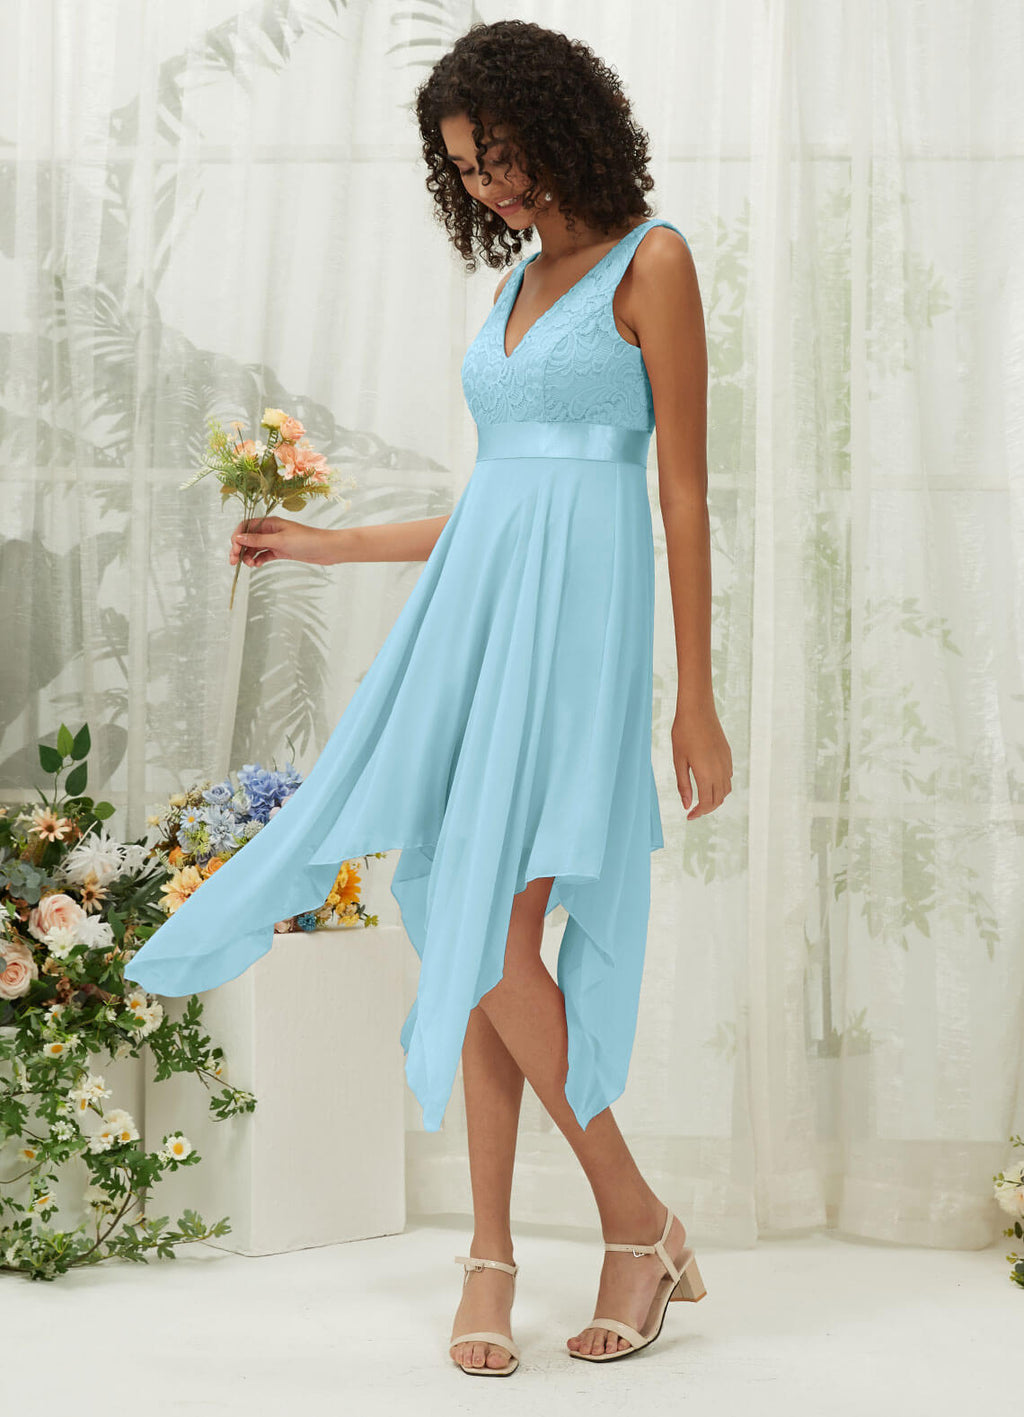 NZ Bridal Cornflower Blue V Neck Chiffon bridesmaid dresses 00207ep Evie a